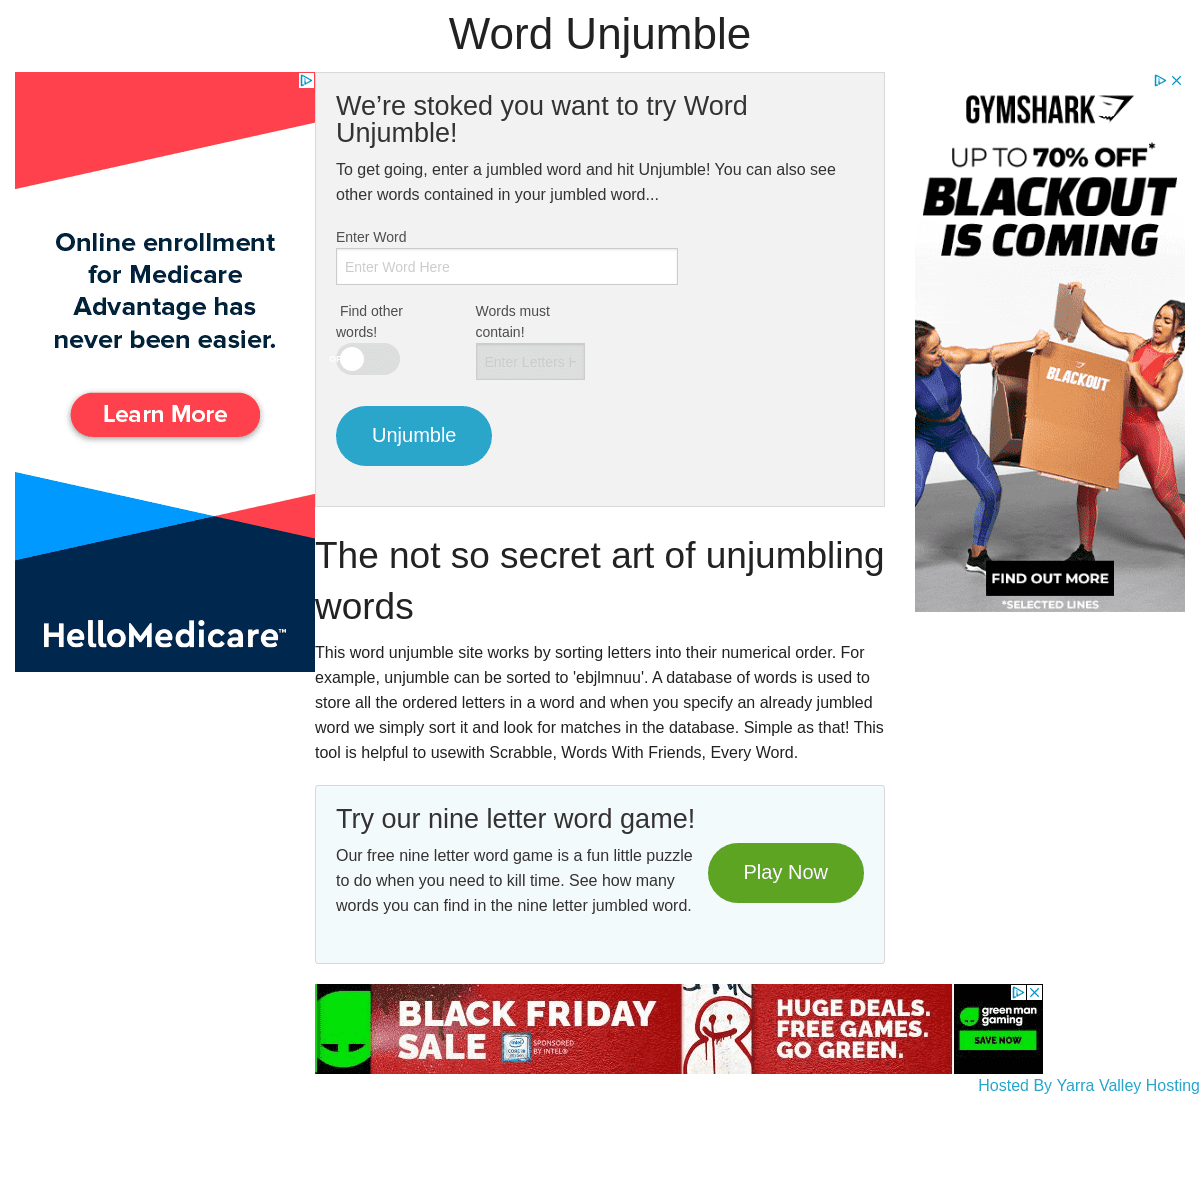 A complete backup of wordunjumble.com